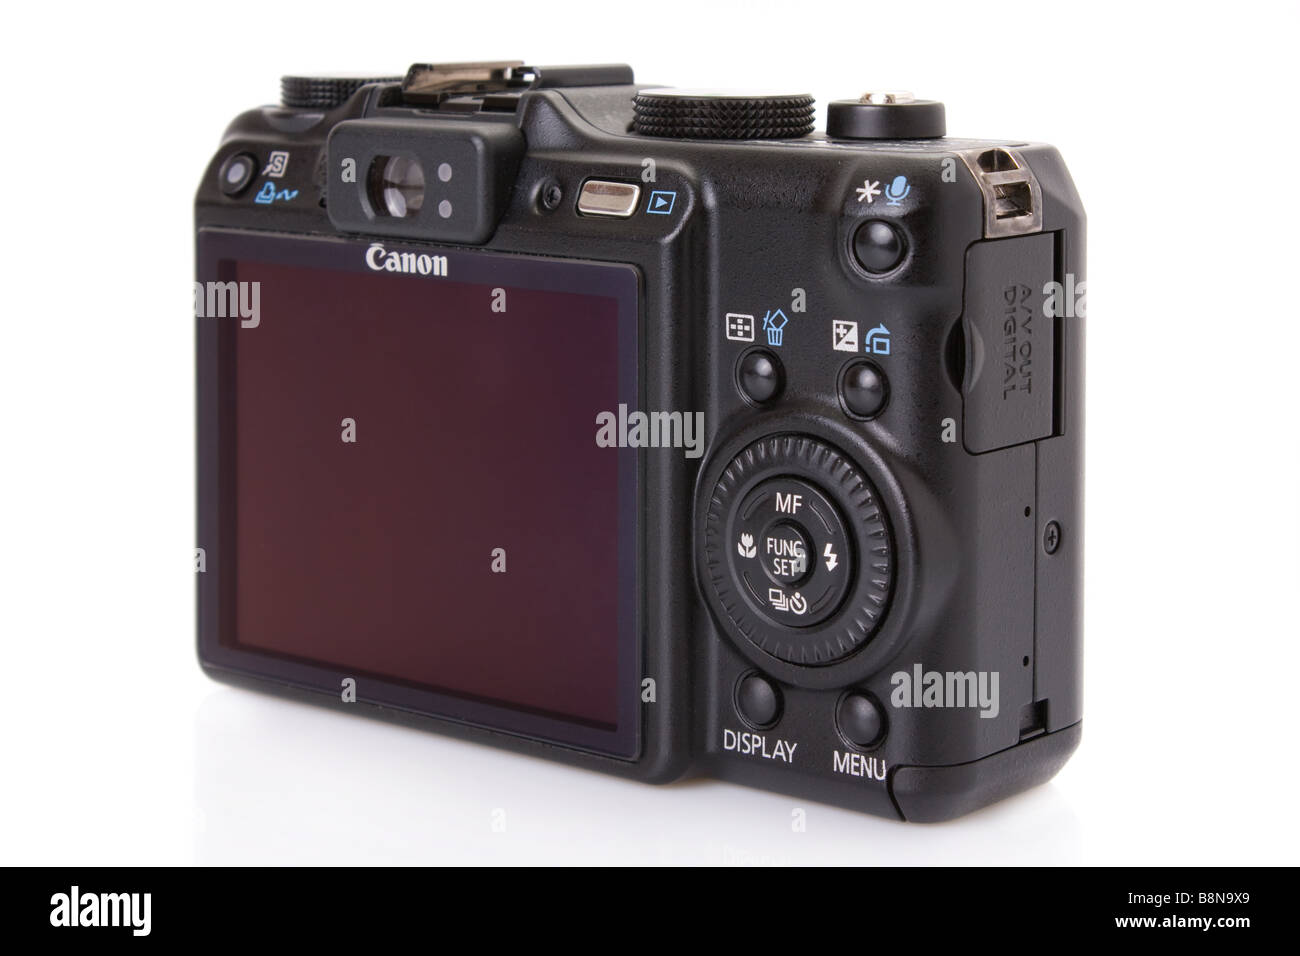 Canon Powershot G9 digital compact camera Stock Photo